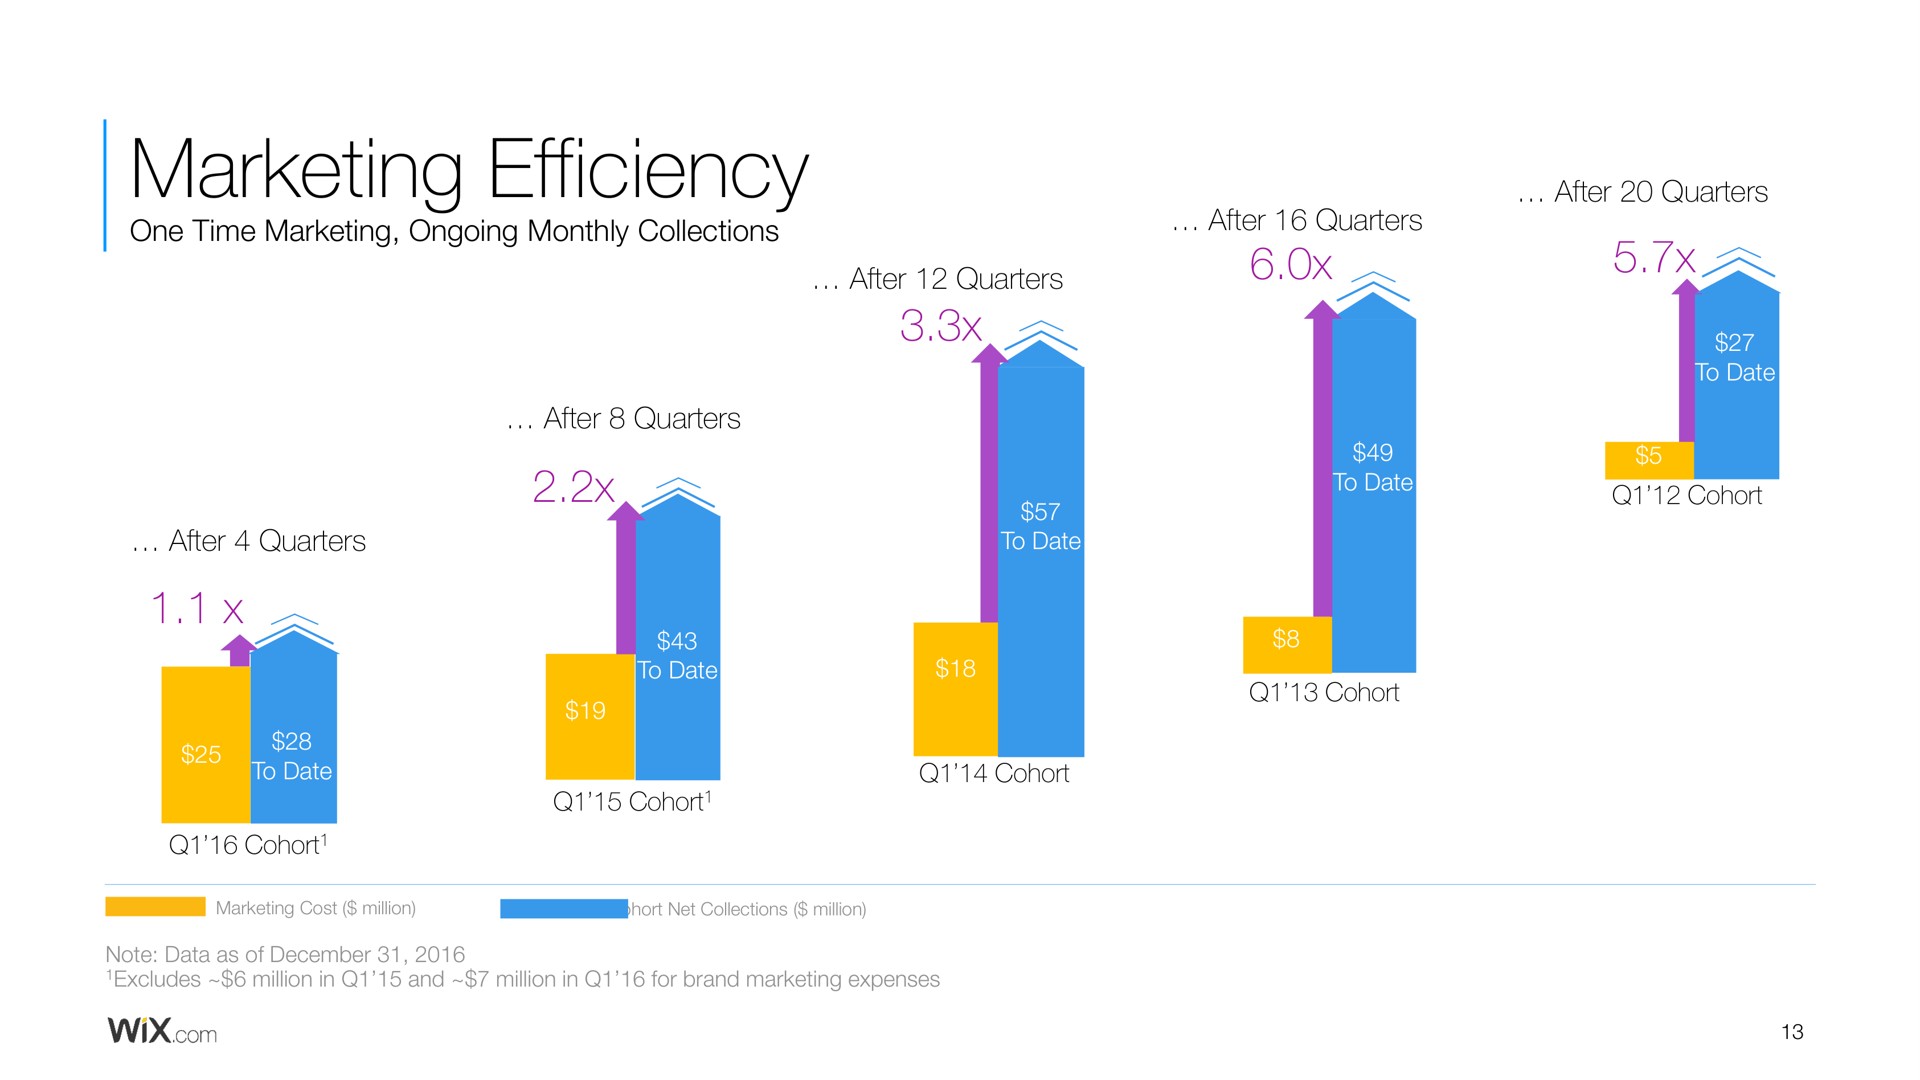 marketing efficiency aer quarters | Wix